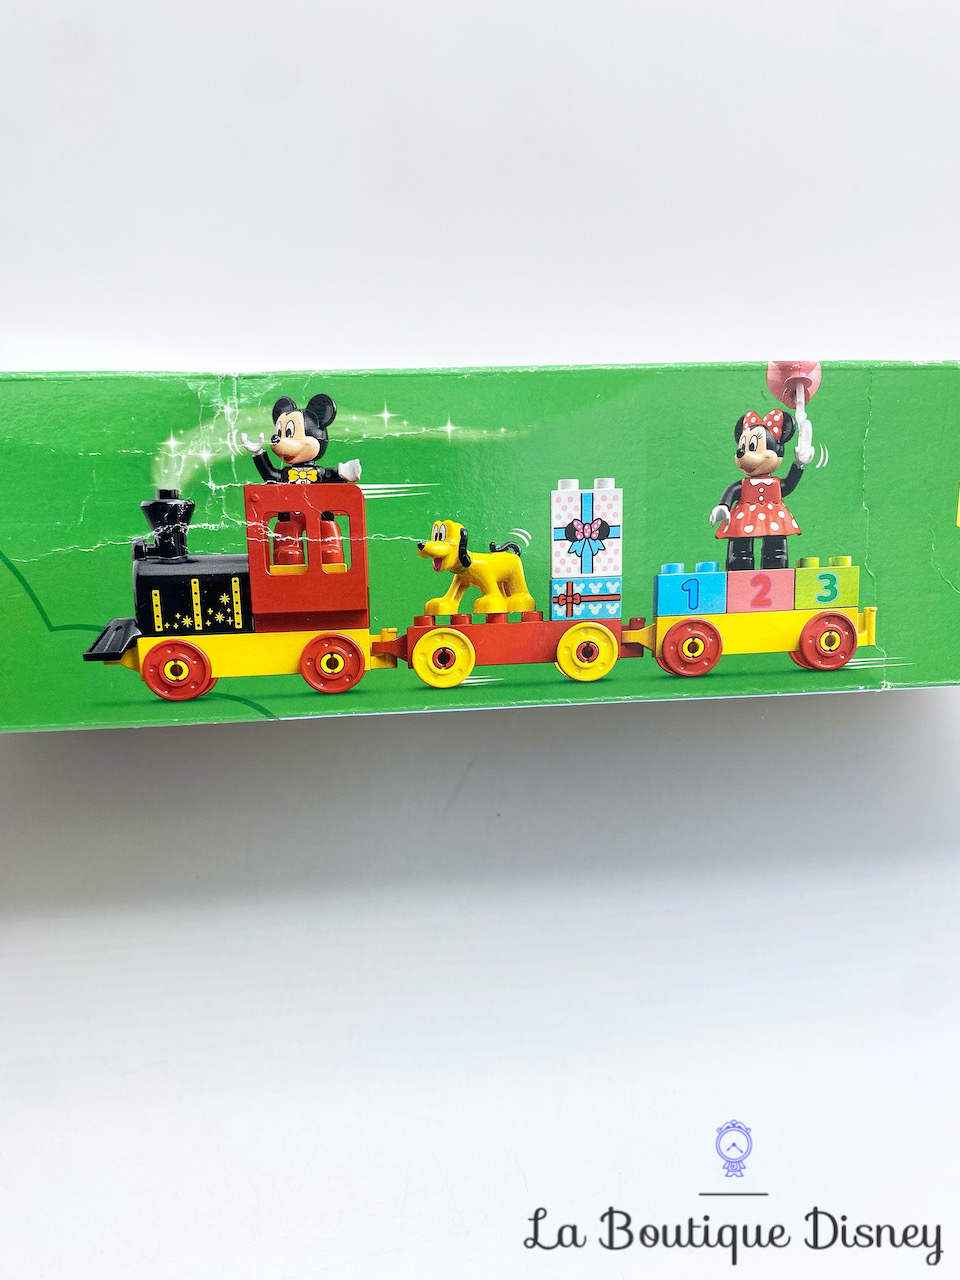 Lego Duplo : Train d'anniversaire de Disney Mickey et Minnie